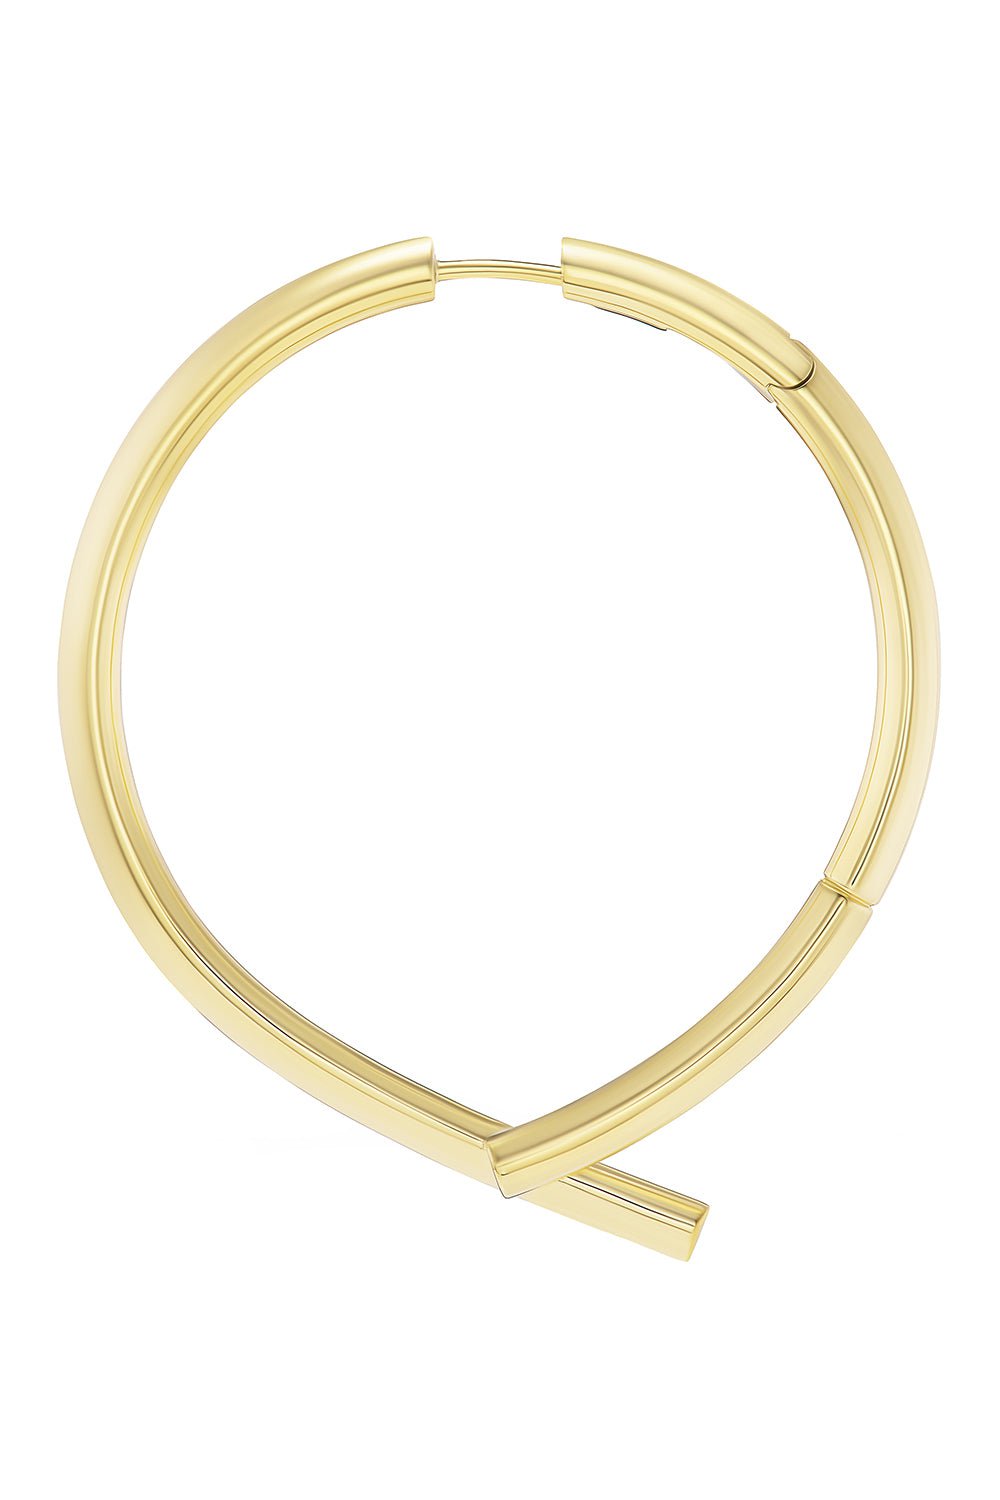 TABAYER-Oera Orb Earrings-YELLOW GOLD